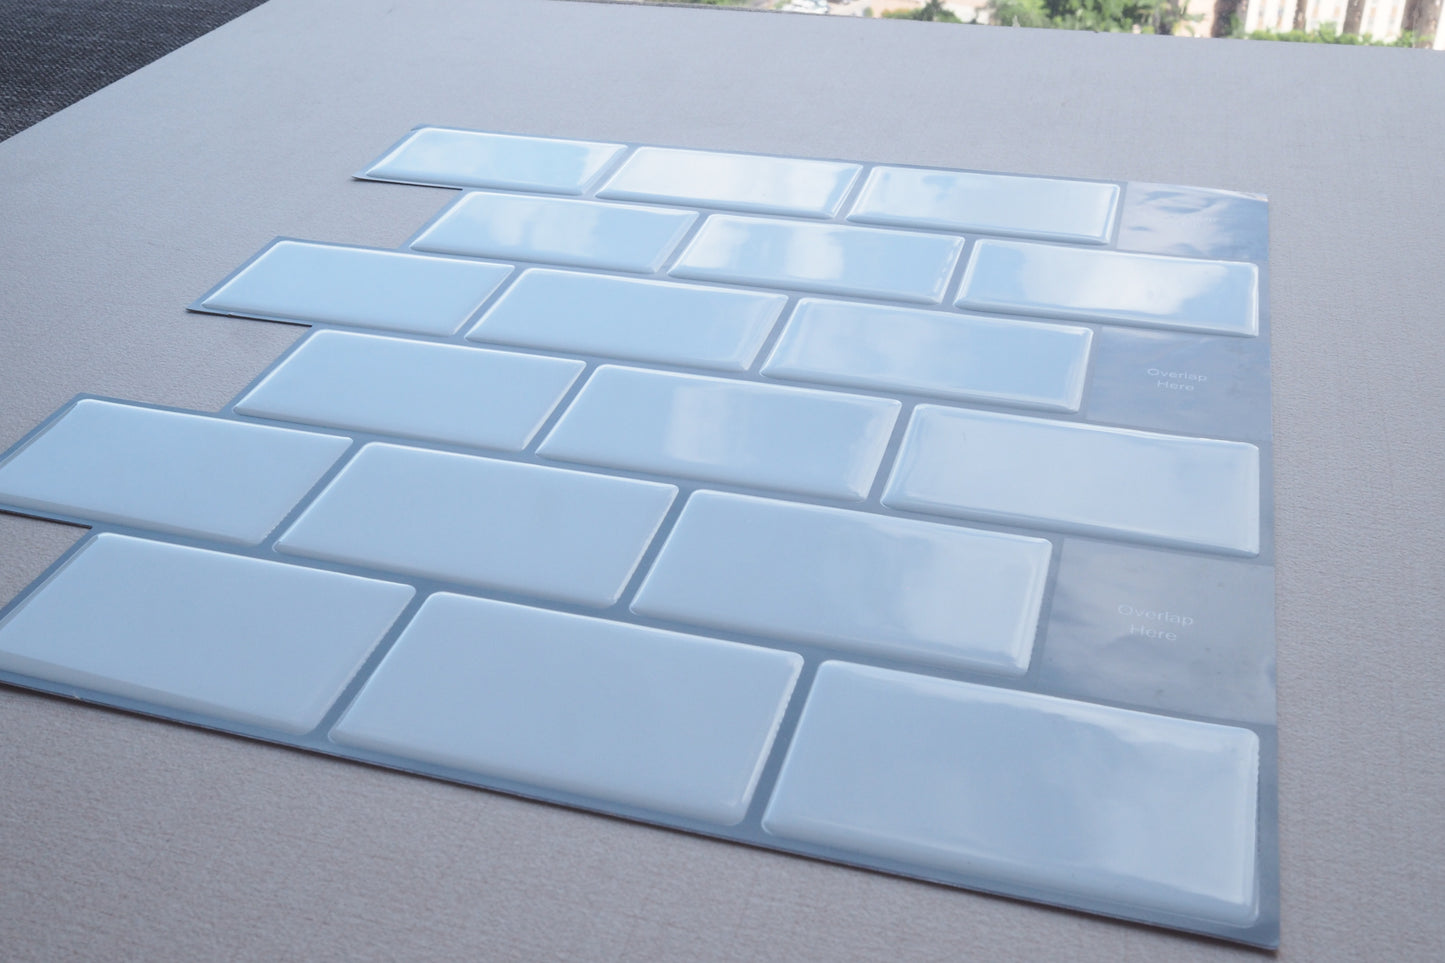 Decopus 3D Subway Tile Peel and Stick Backsplash Mono Whtie (Subway 2'x3.5' chip 12 x 12' Sheet, 10pc/Pack) for Kitchen, Bathroom, Wall Accents, FauxStone Soft Vinyl